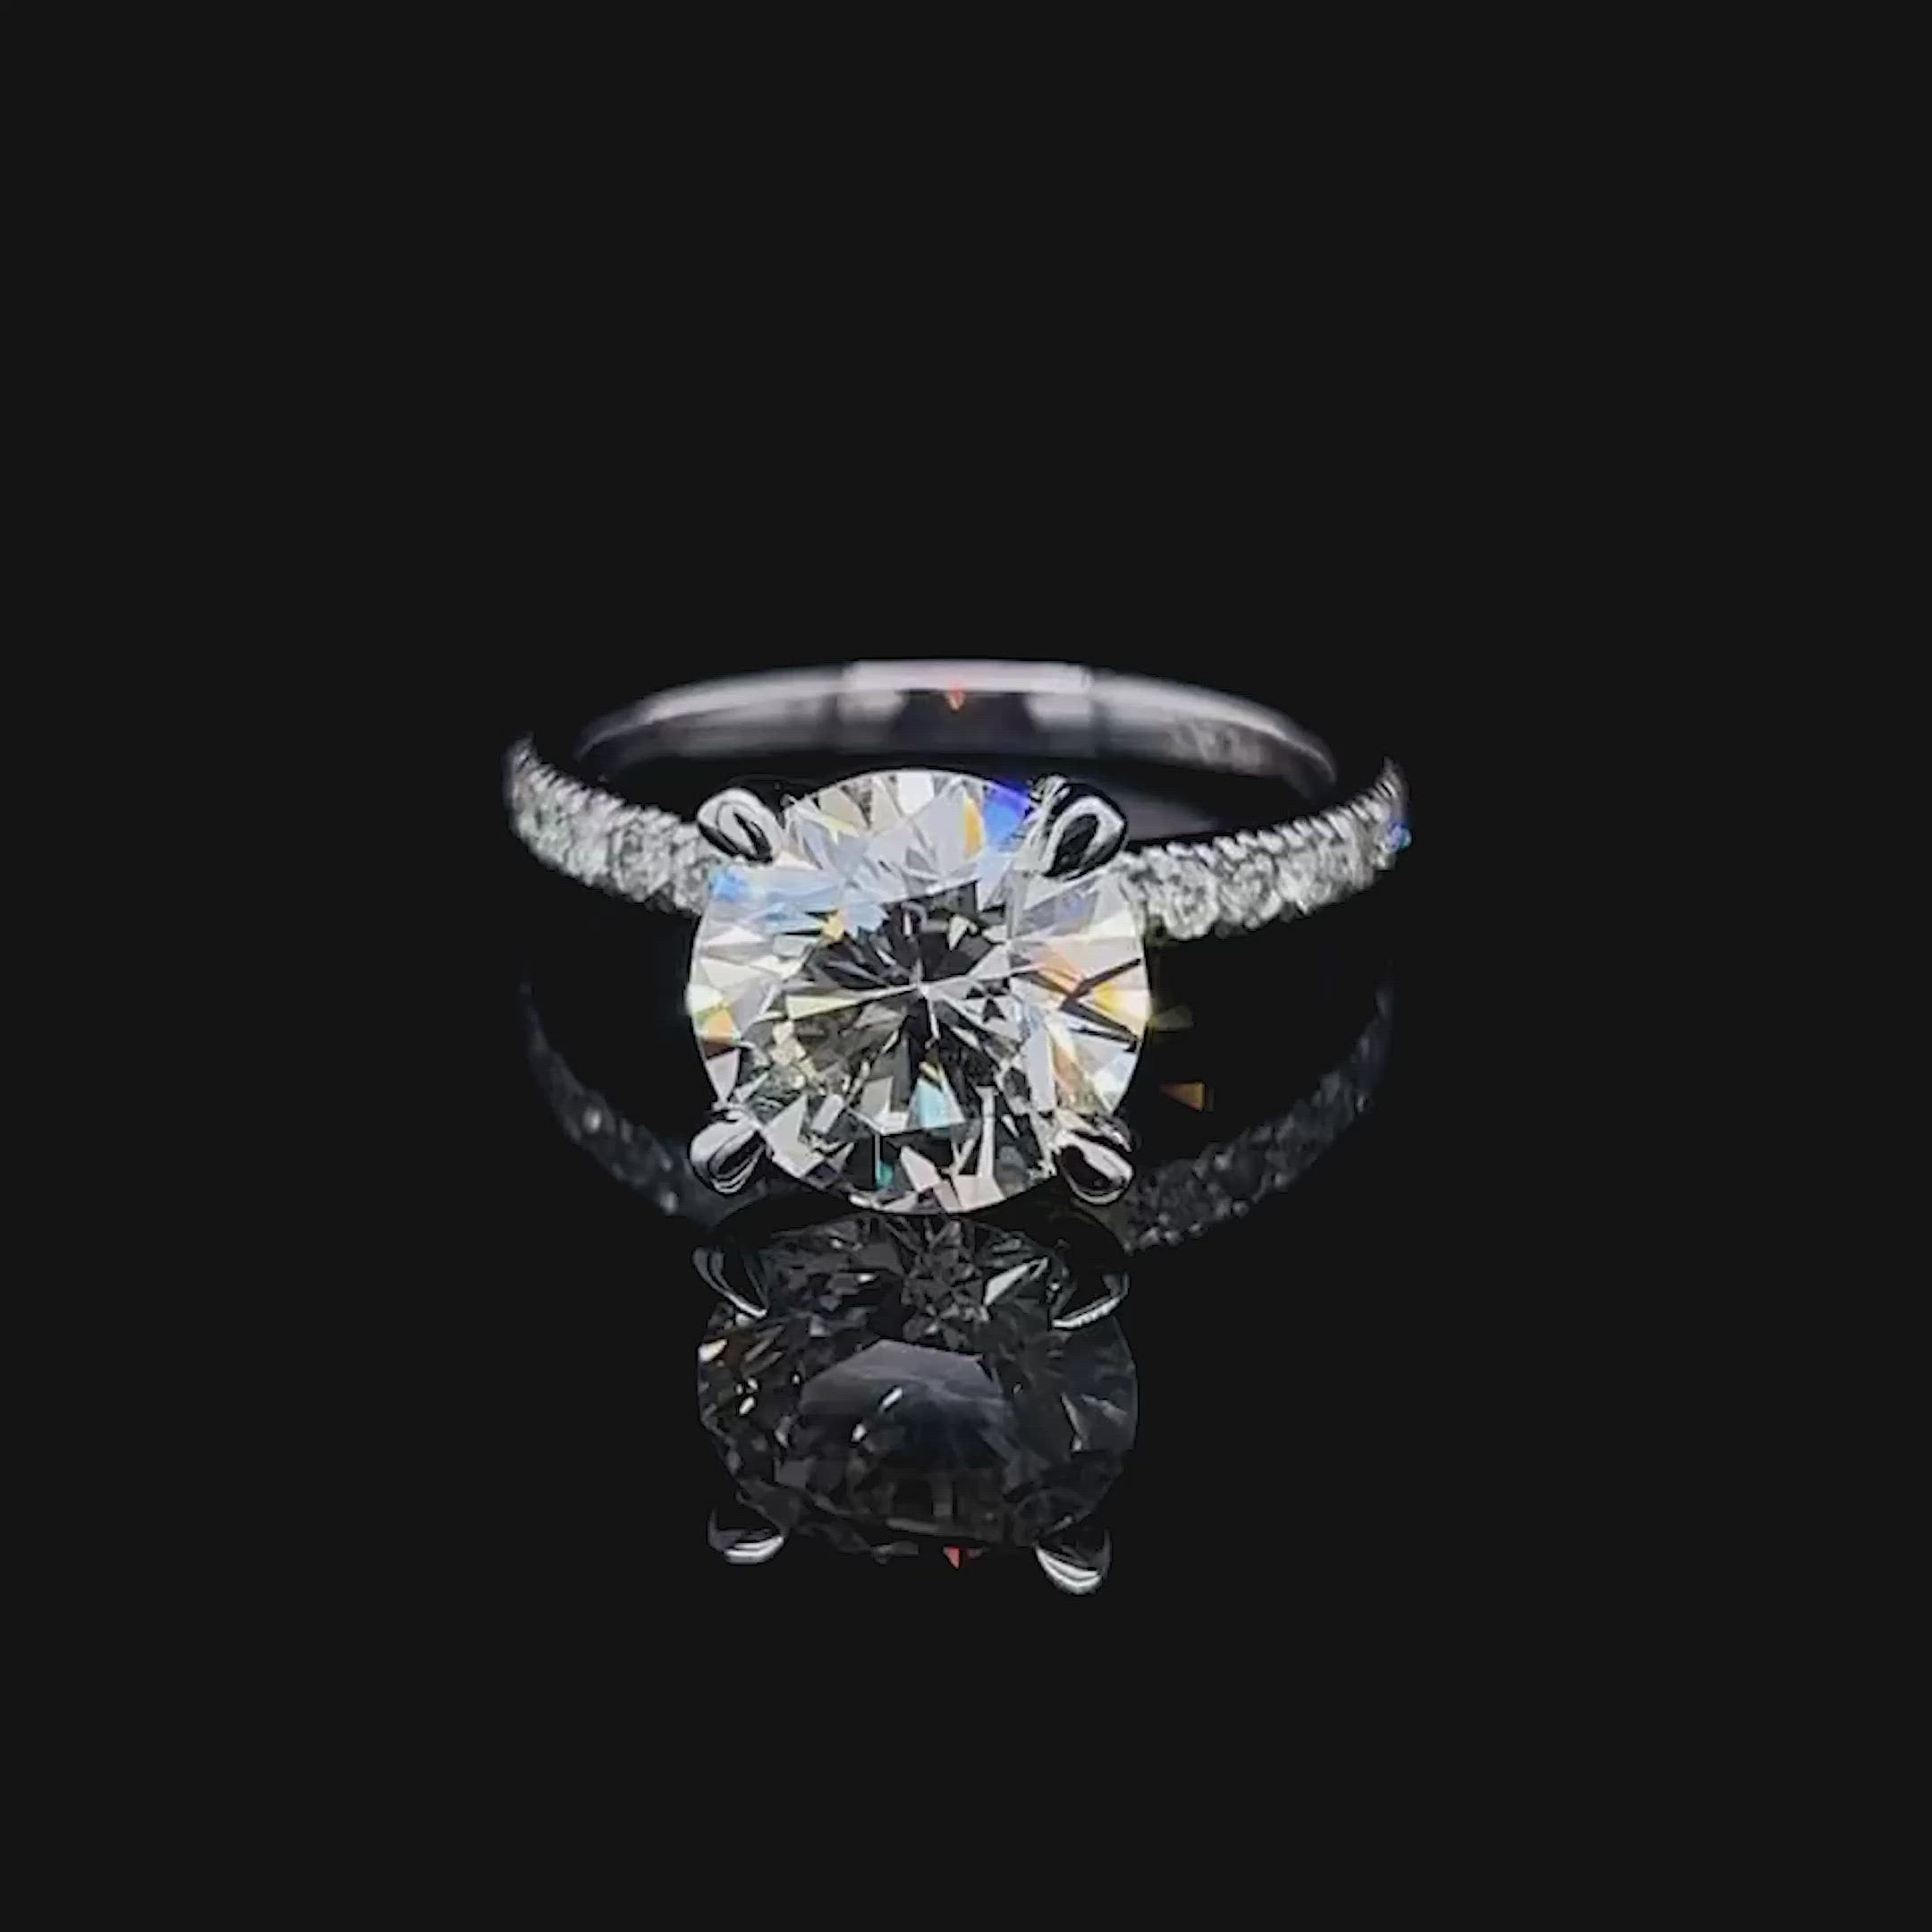 Certified 3.30 CT Round Cut Diamond Engagement Ring in Platinum